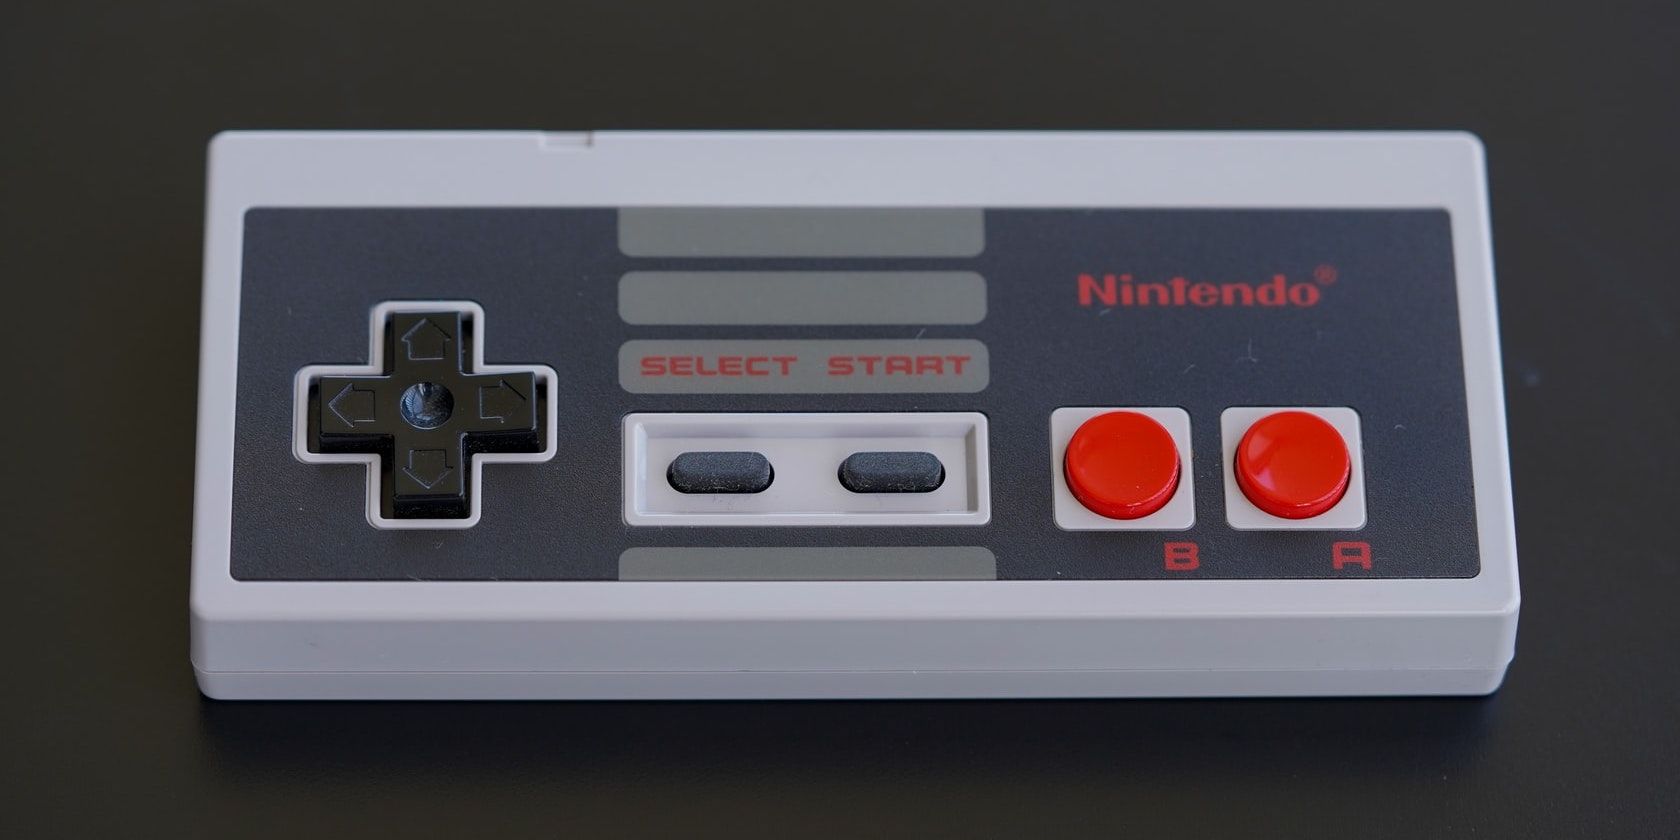 Photograph of an NES controller